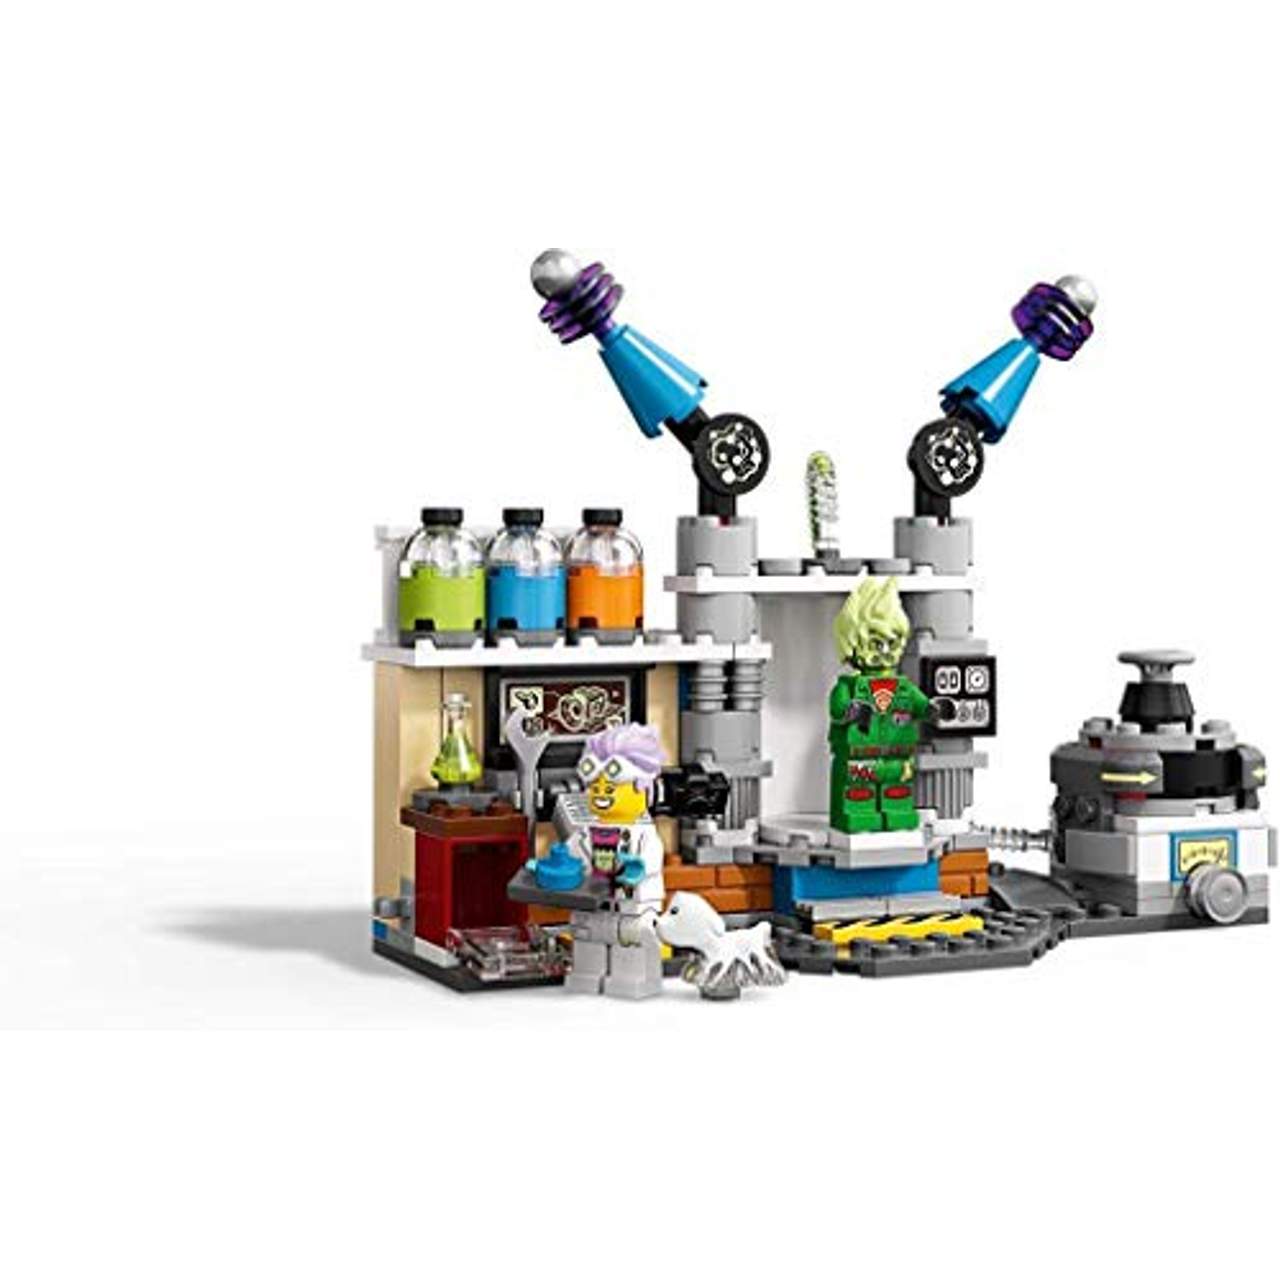 LEGO 70418 Hidden Side J.B.'s Geisterlabor Kinderspielzeug